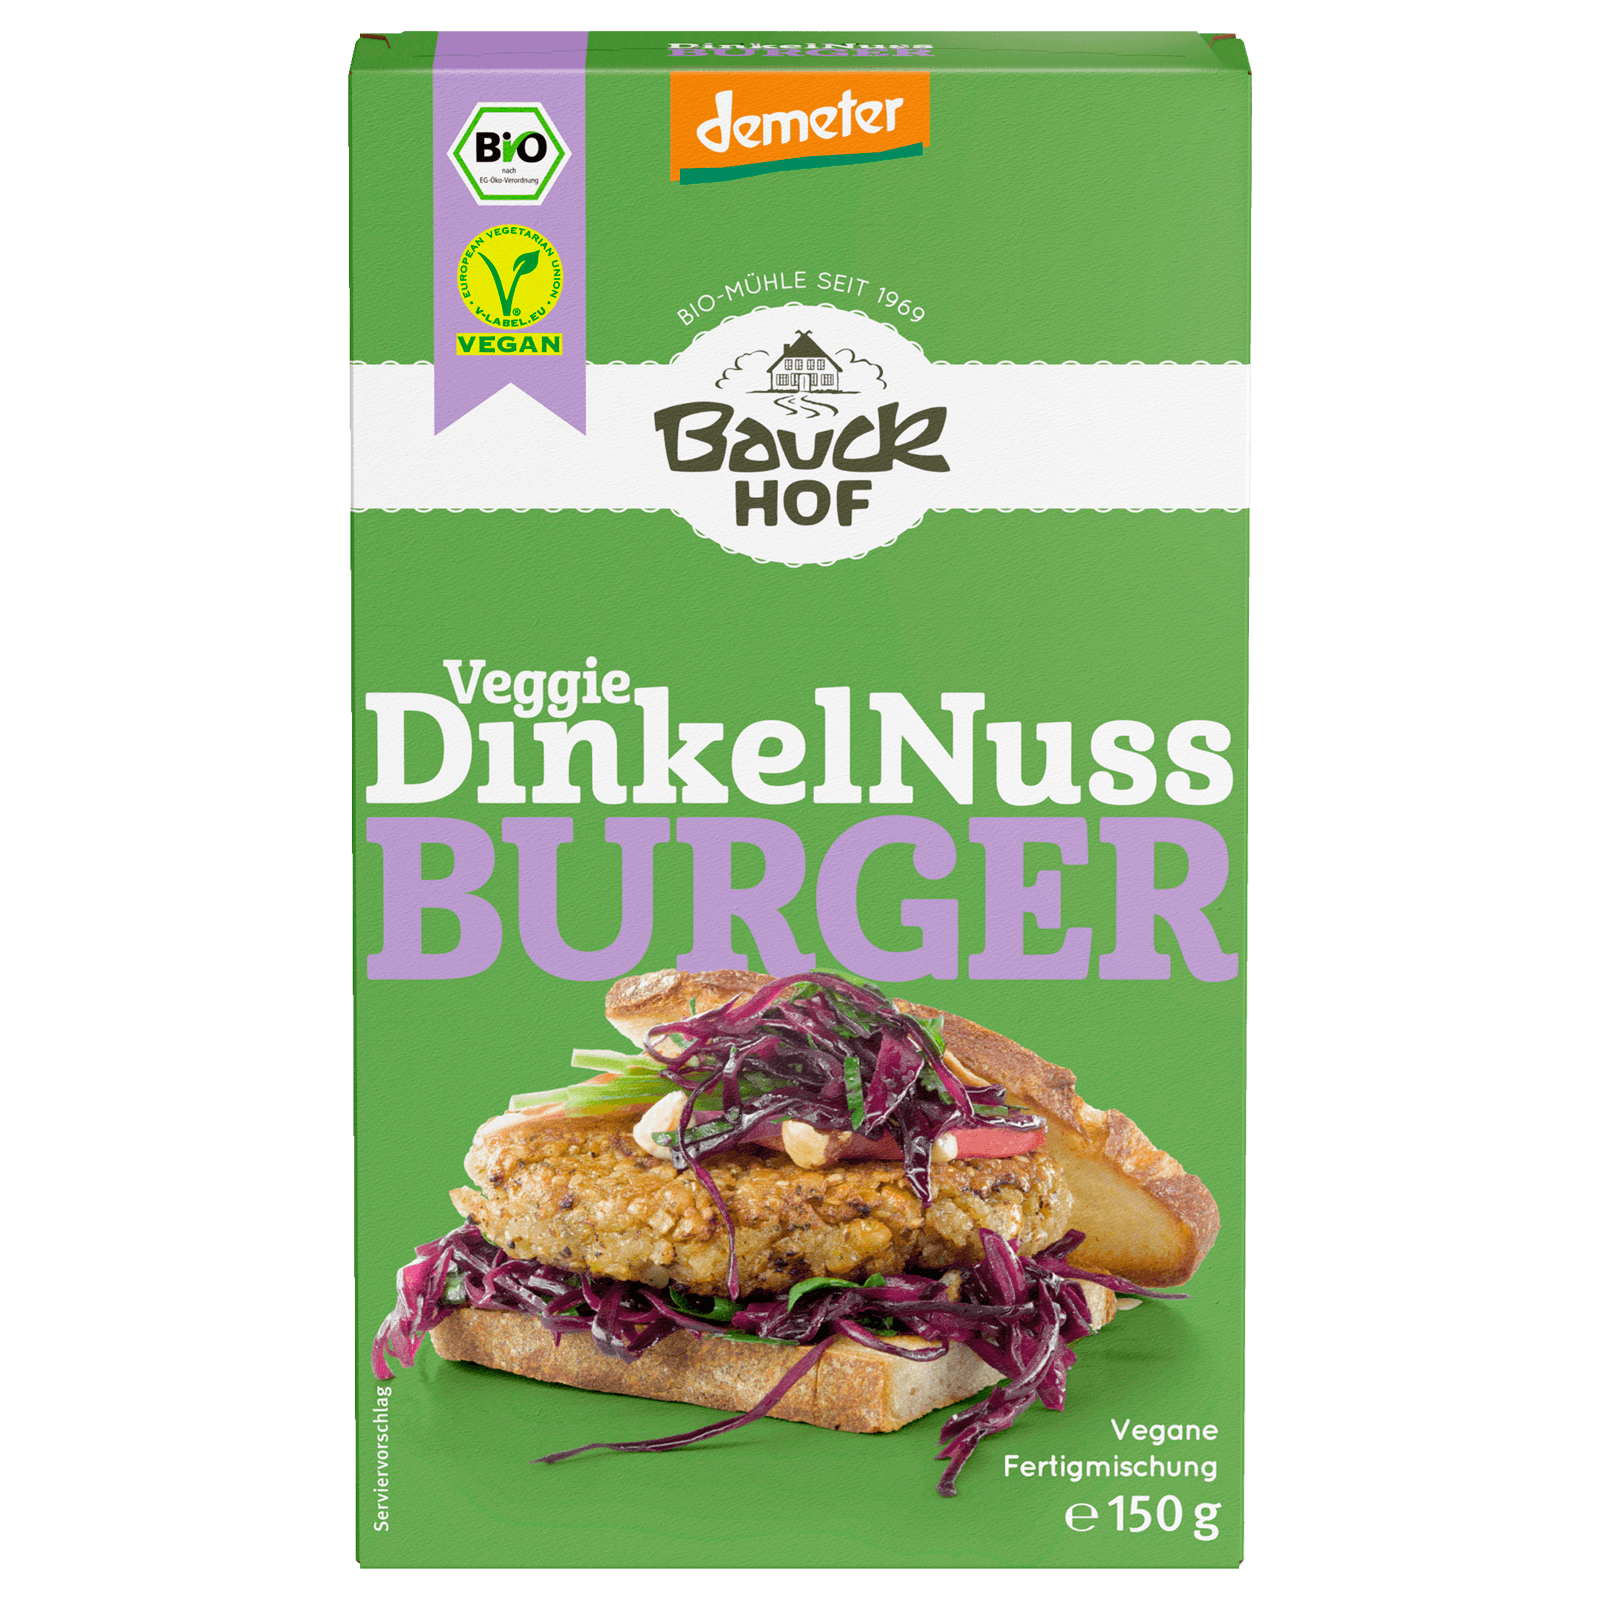 Bauckhof Bio Demeter Veggie Dinkelnuss-Burger Vegan 150g